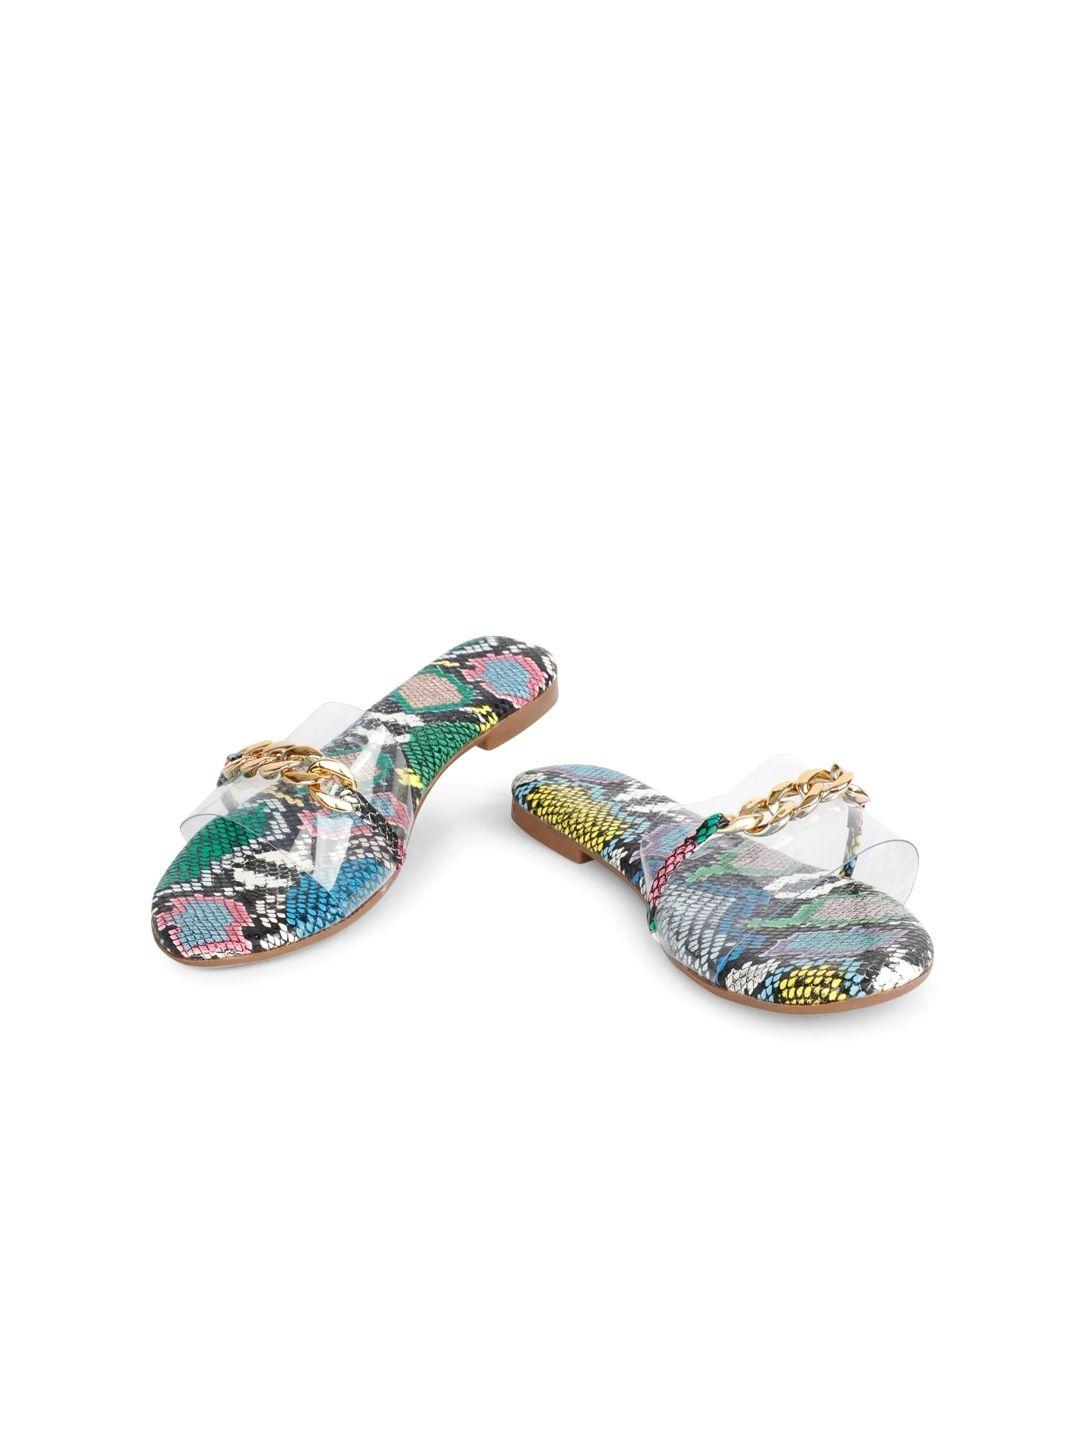 stylzrepublic printed chain embellished open toe flats